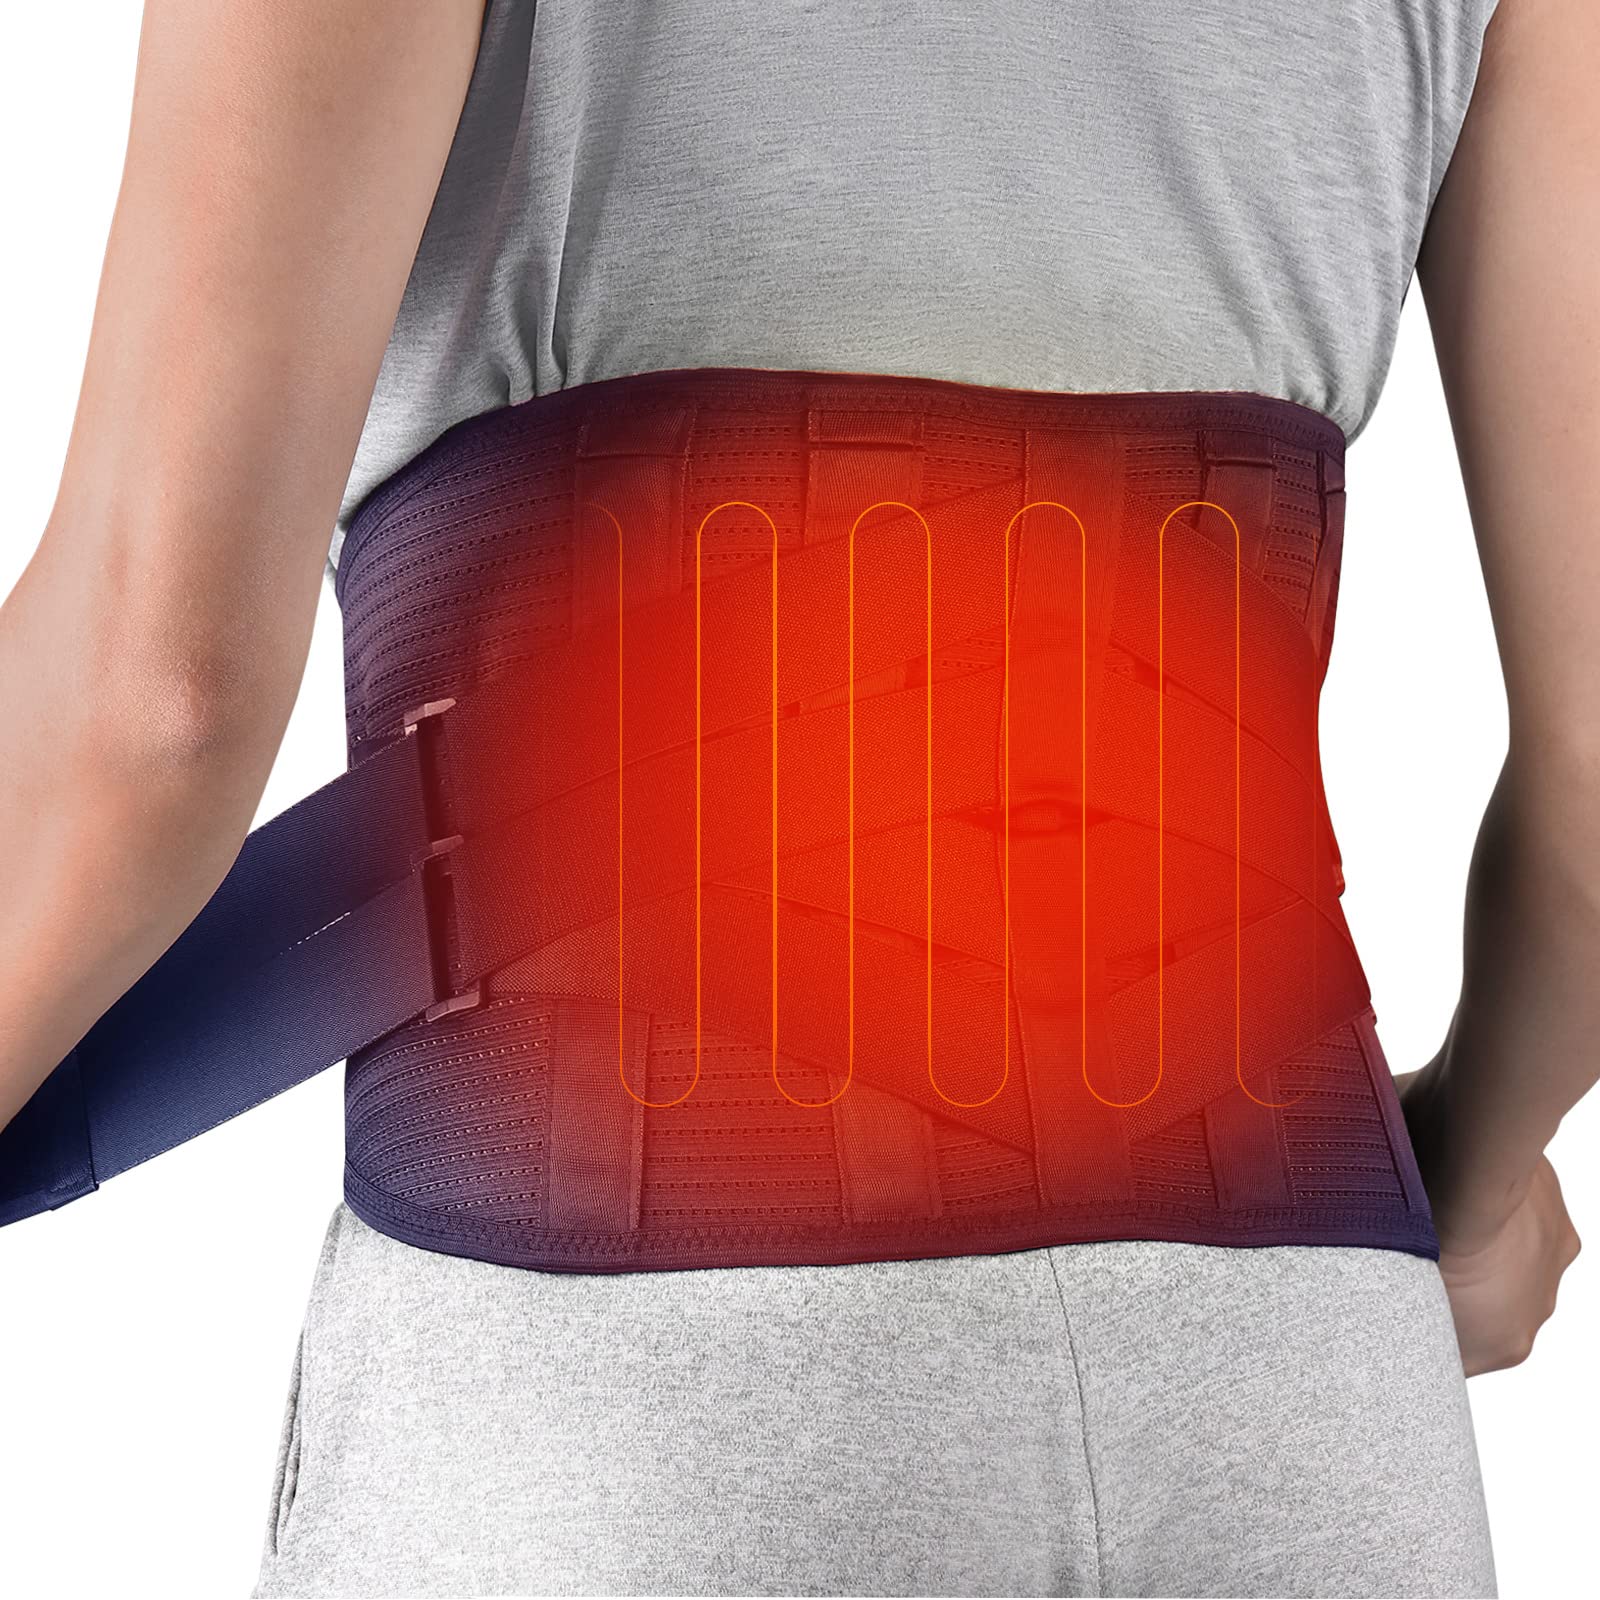 HONGJING Heated Back Brace for Lower Back Pain Relief, Back Belt